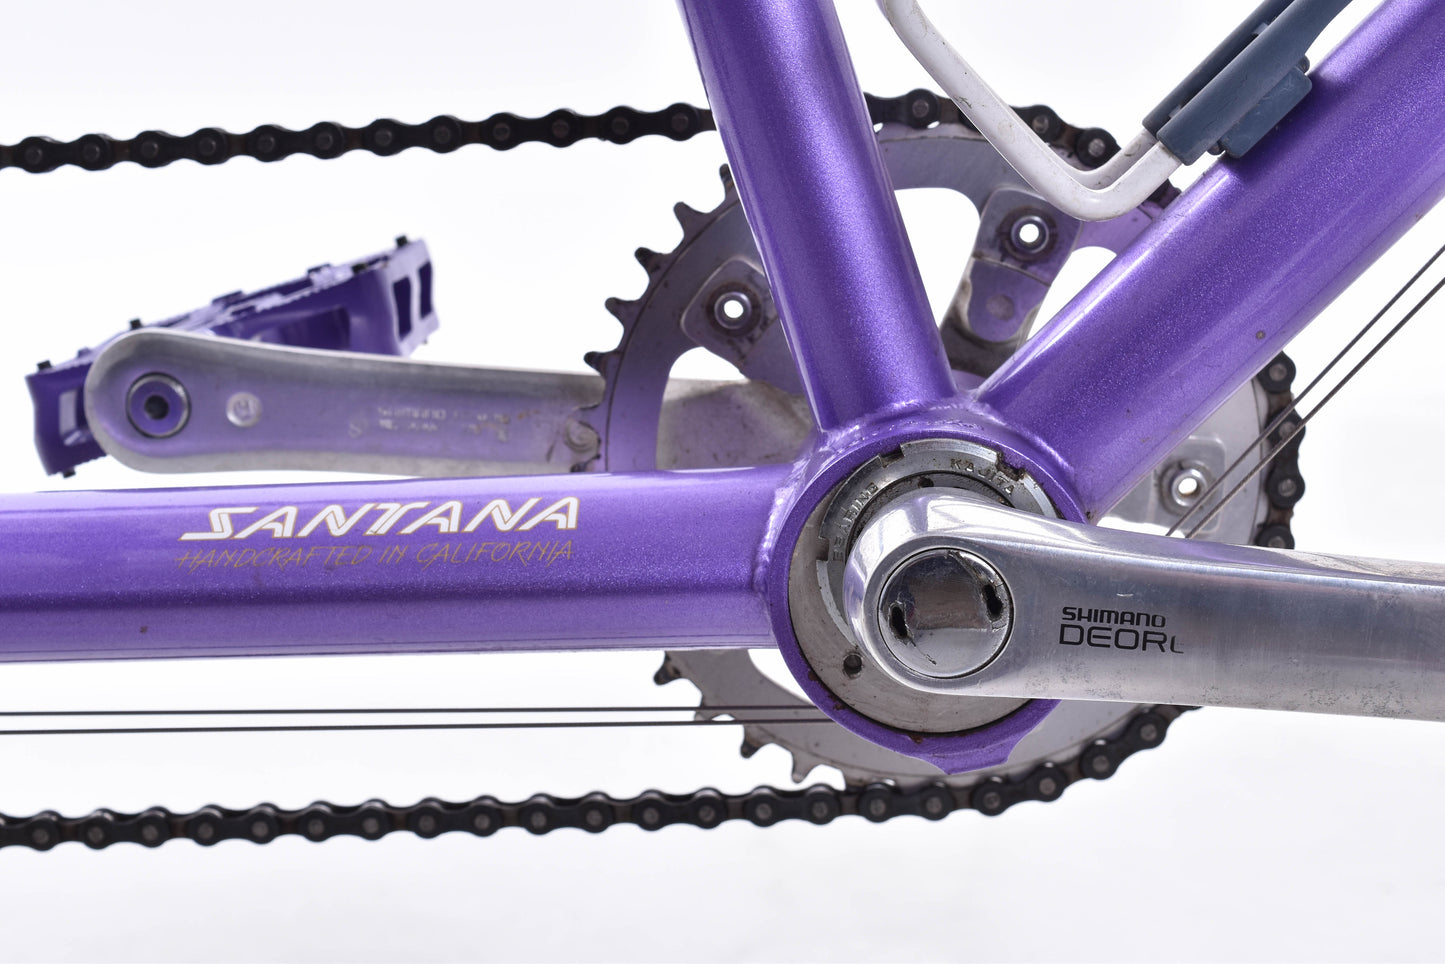 USED 1994 Santana Rio 22"/20" ATB Tandem Bike Purple Tange Chromoly Steel